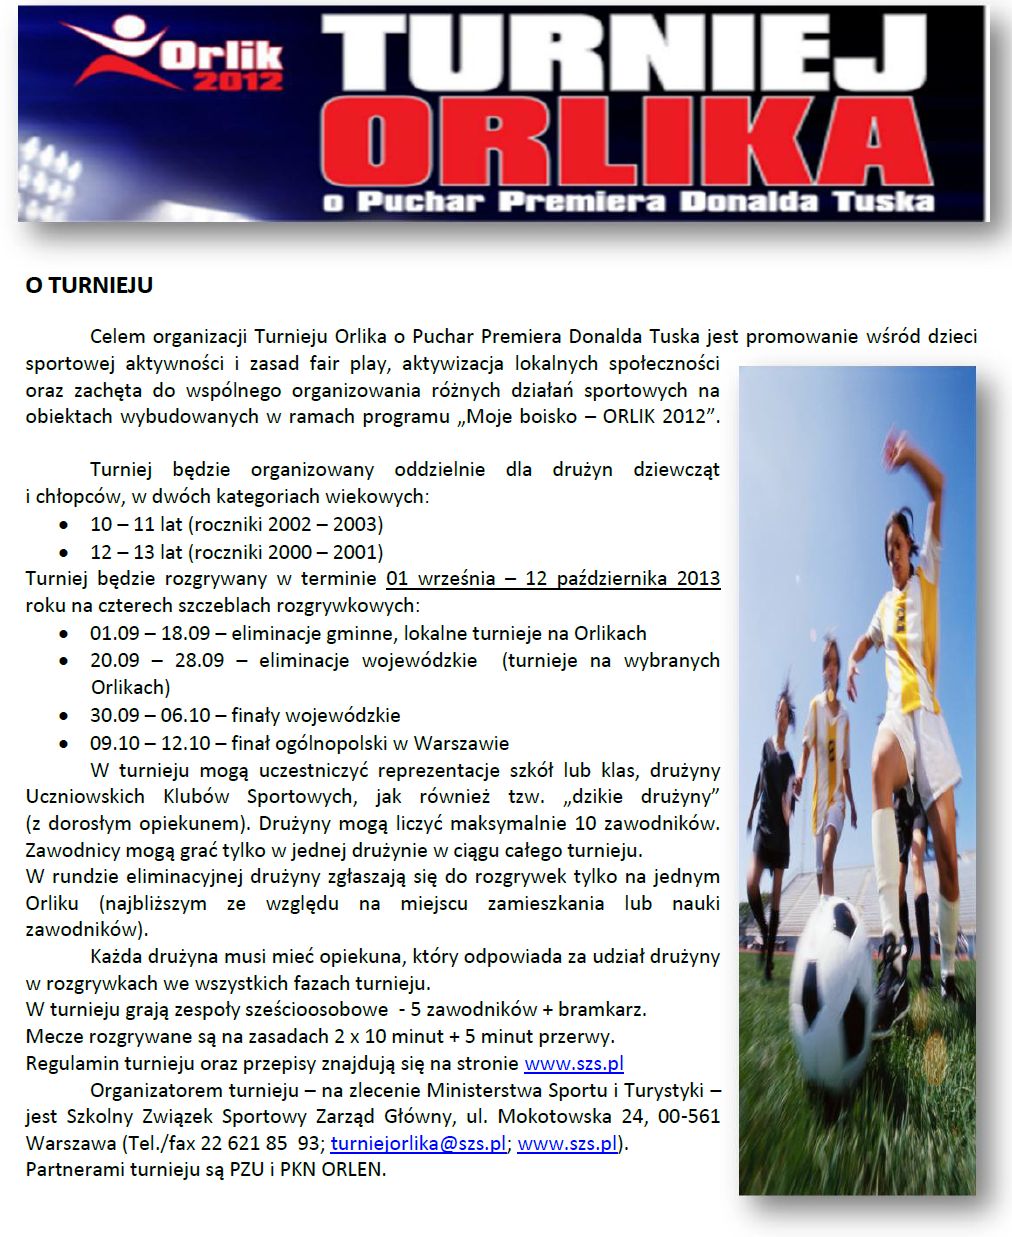 turniej_tuska_info_2013.jpg